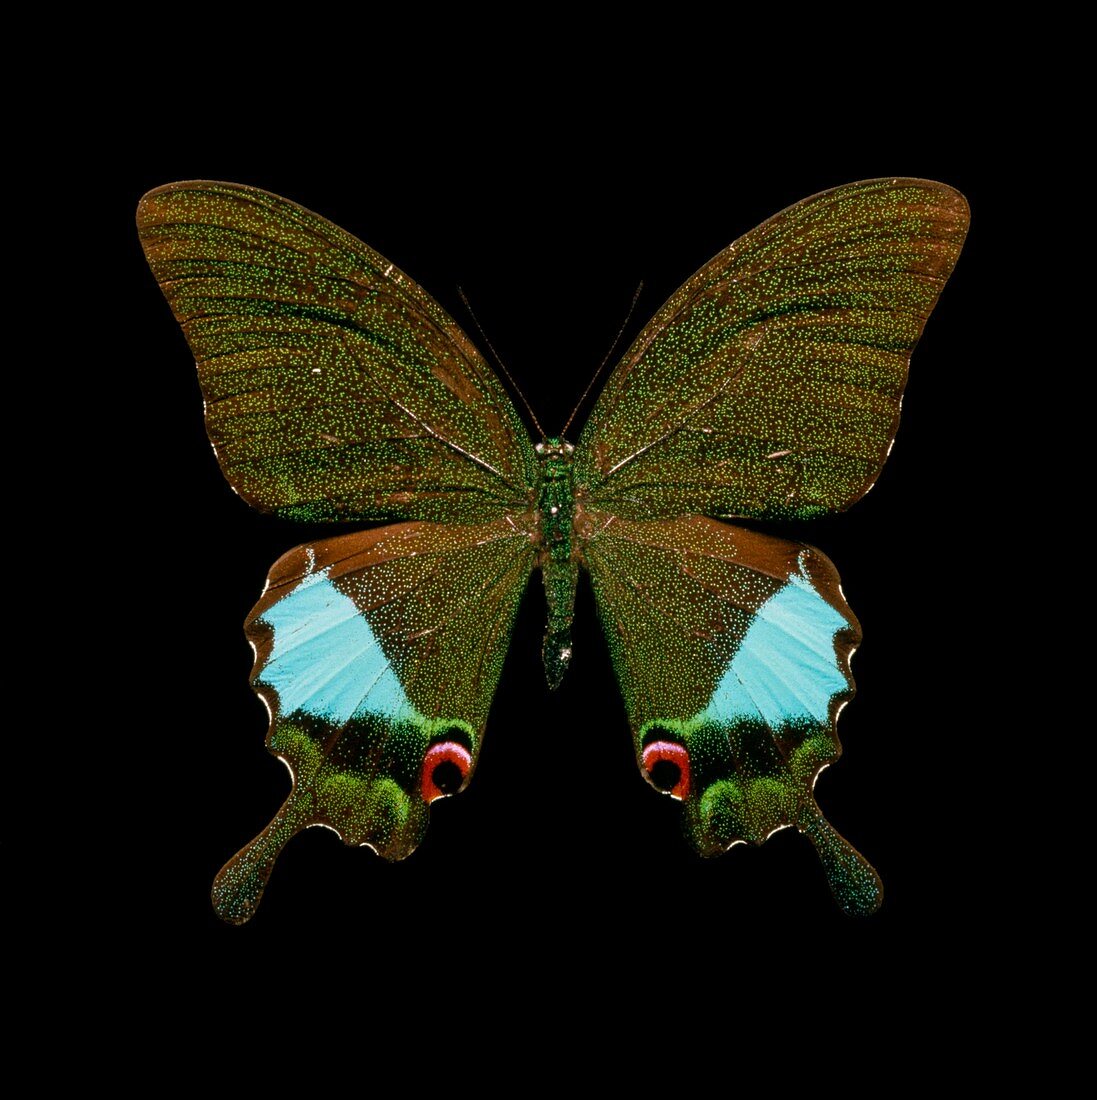 Swallowtail butterfly under UV light